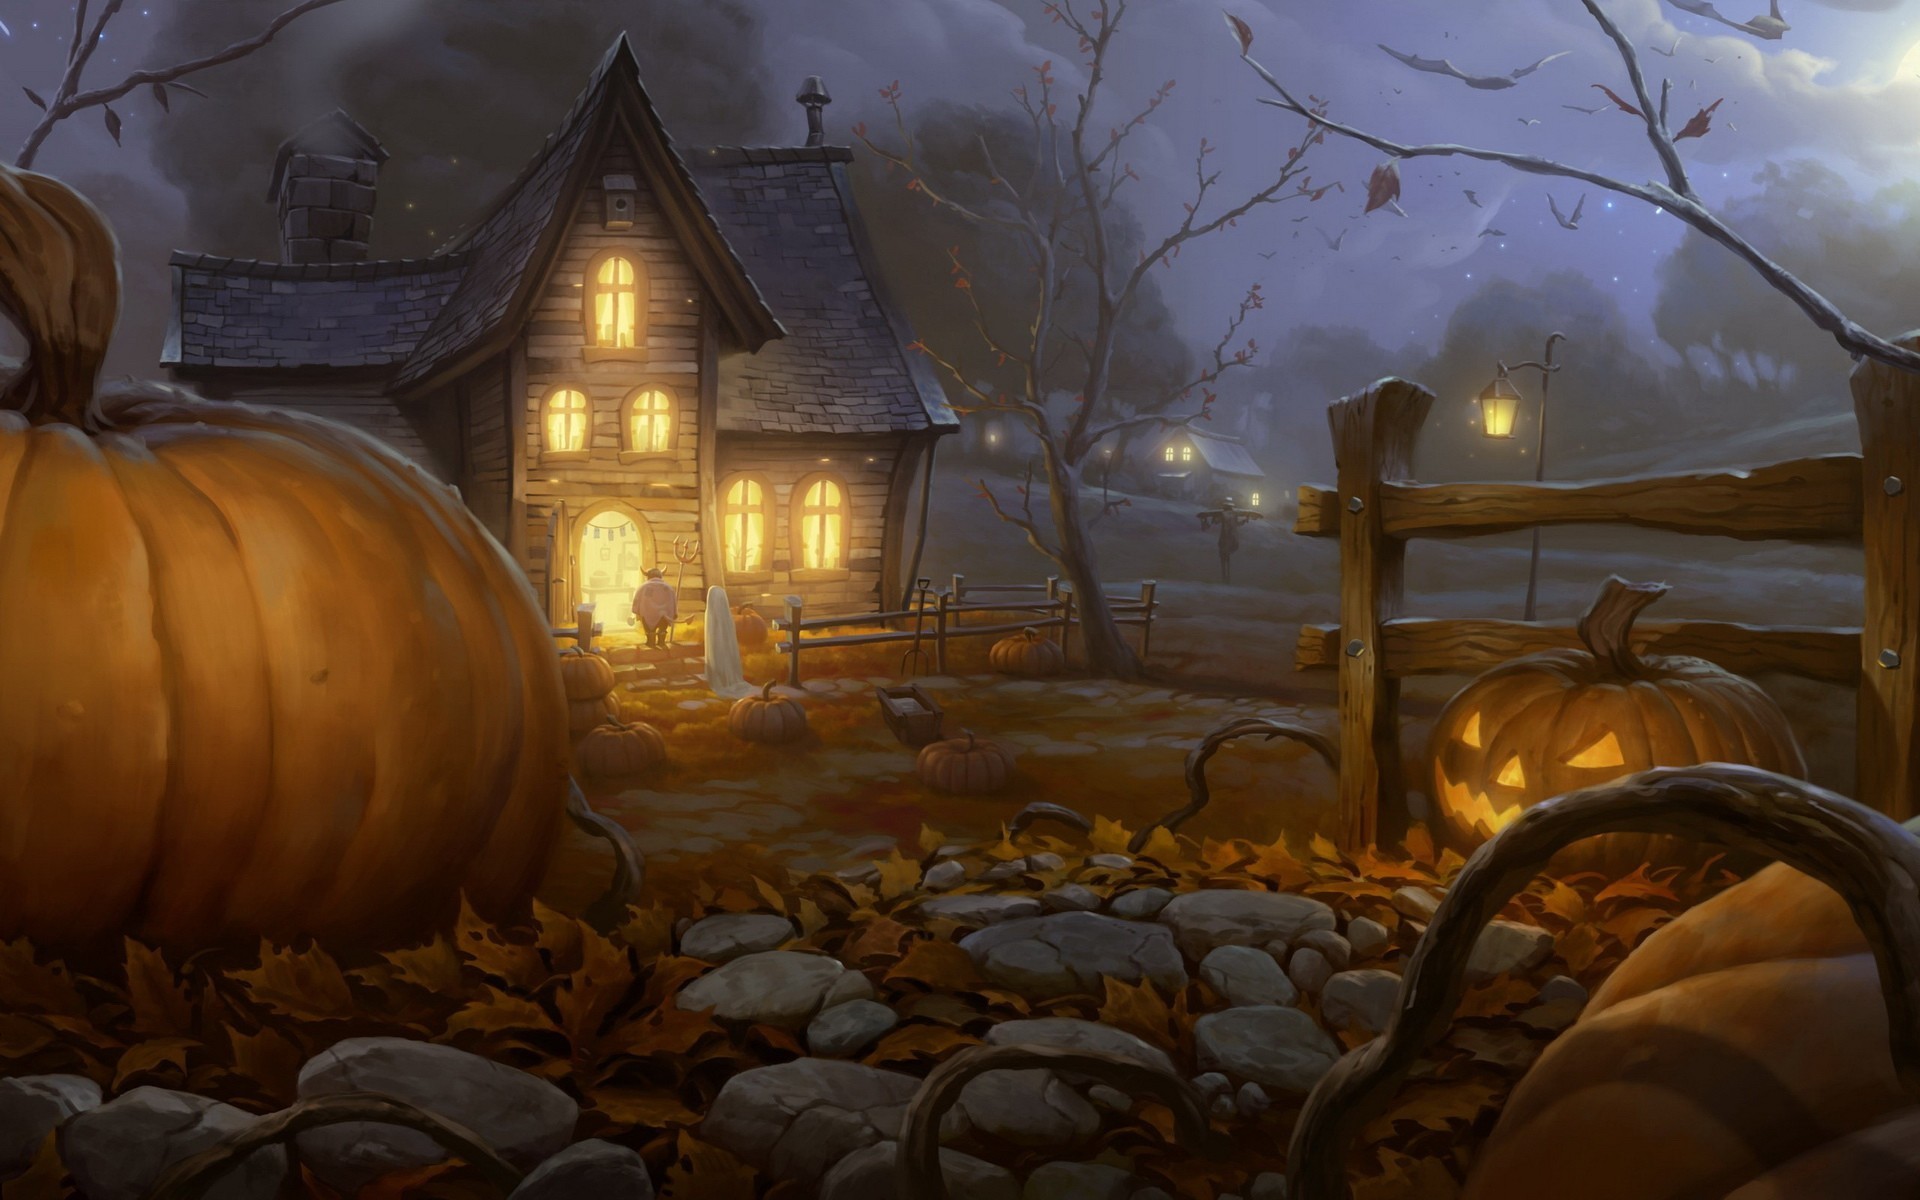 General 1920x1200 Halloween Jack O' Lantern artwork creepy pumpkin house digital art